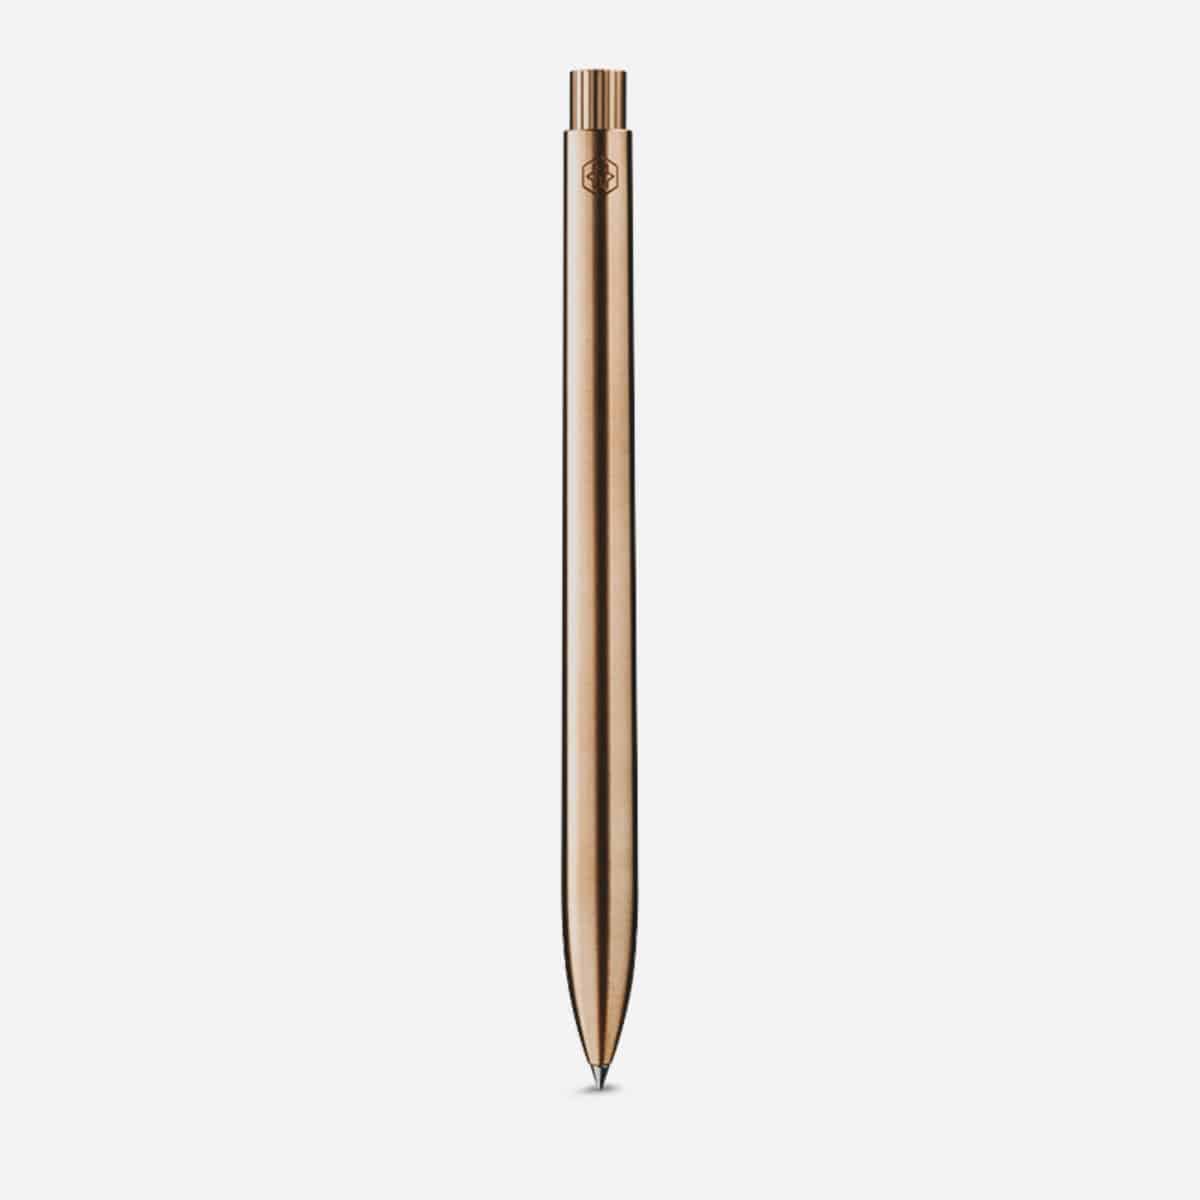 AJOTO gold plated stainless steel pen, gold pen 18ct gold luxury designer pen